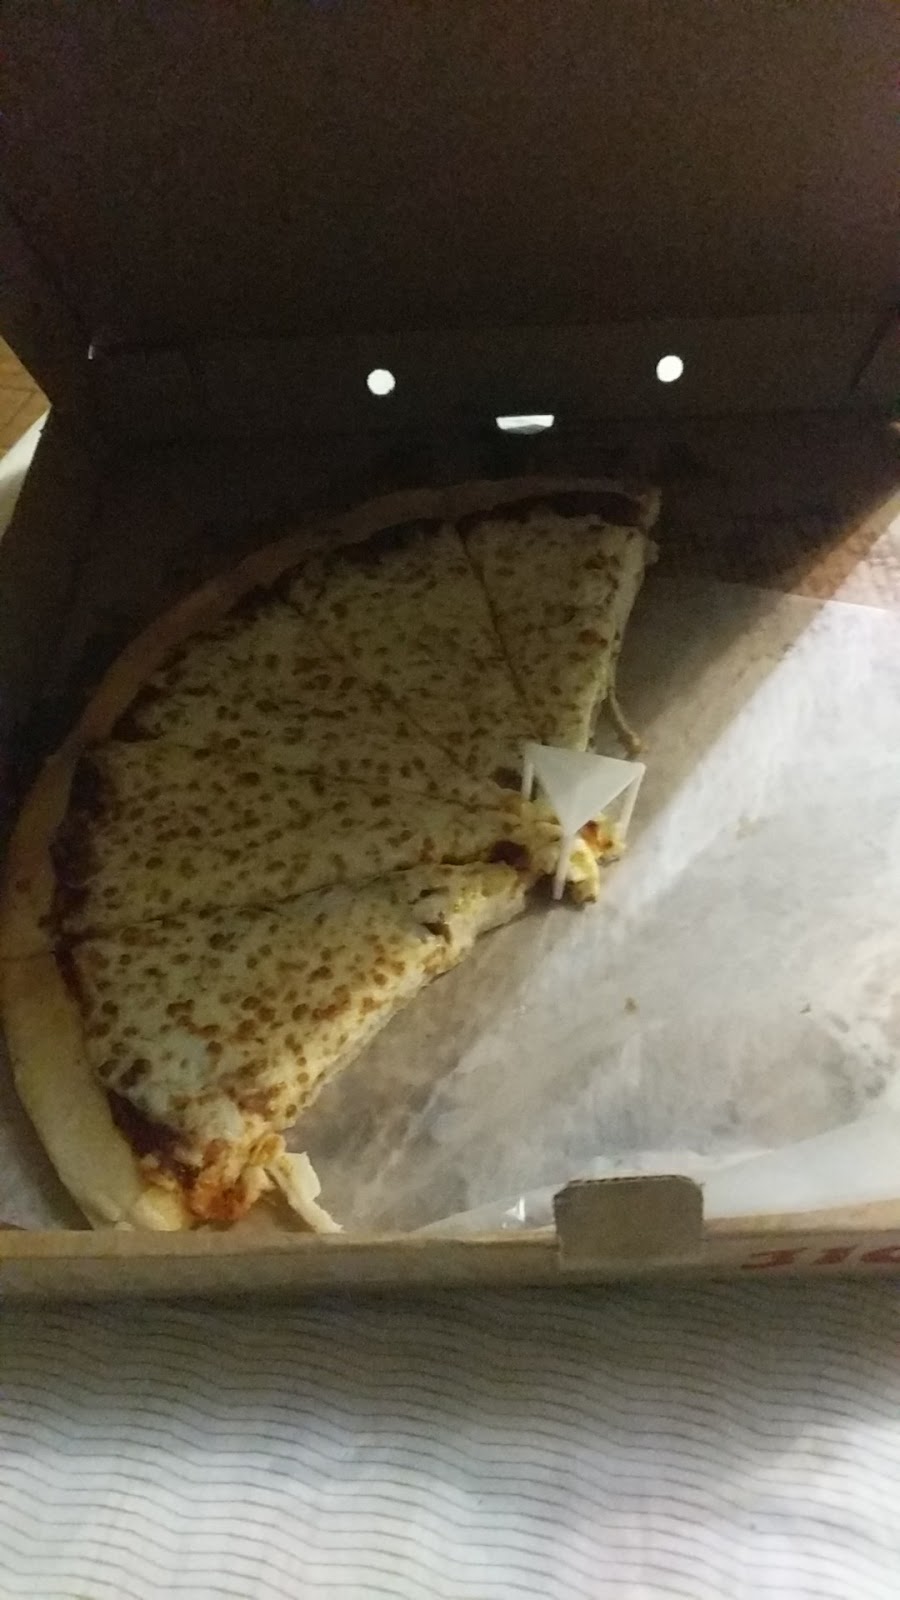 Greco pizza | Lucan Biddulph, ON N0M 2J0, Canada